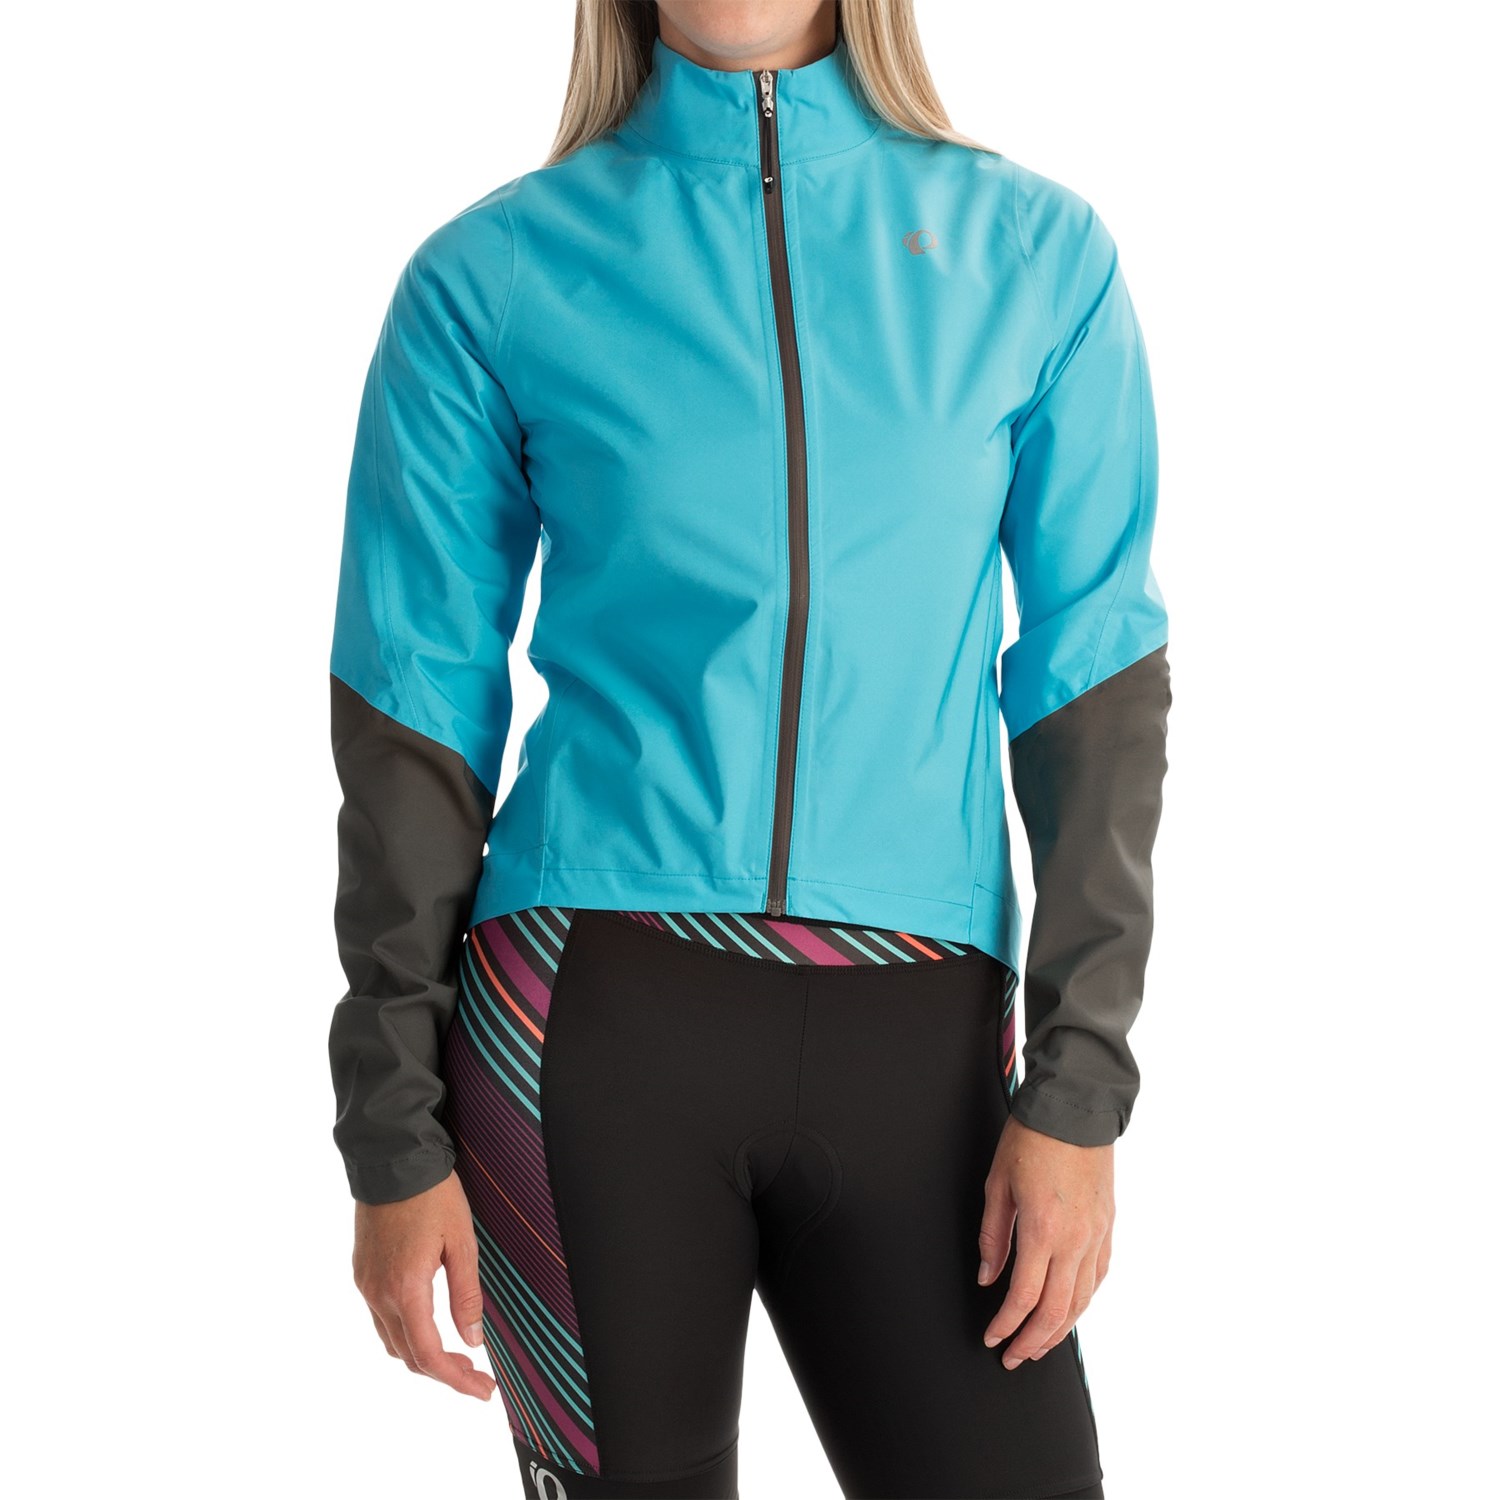 Pearl Izumi ELITE WxB Cycling Jacket (For Women) - Save 58%